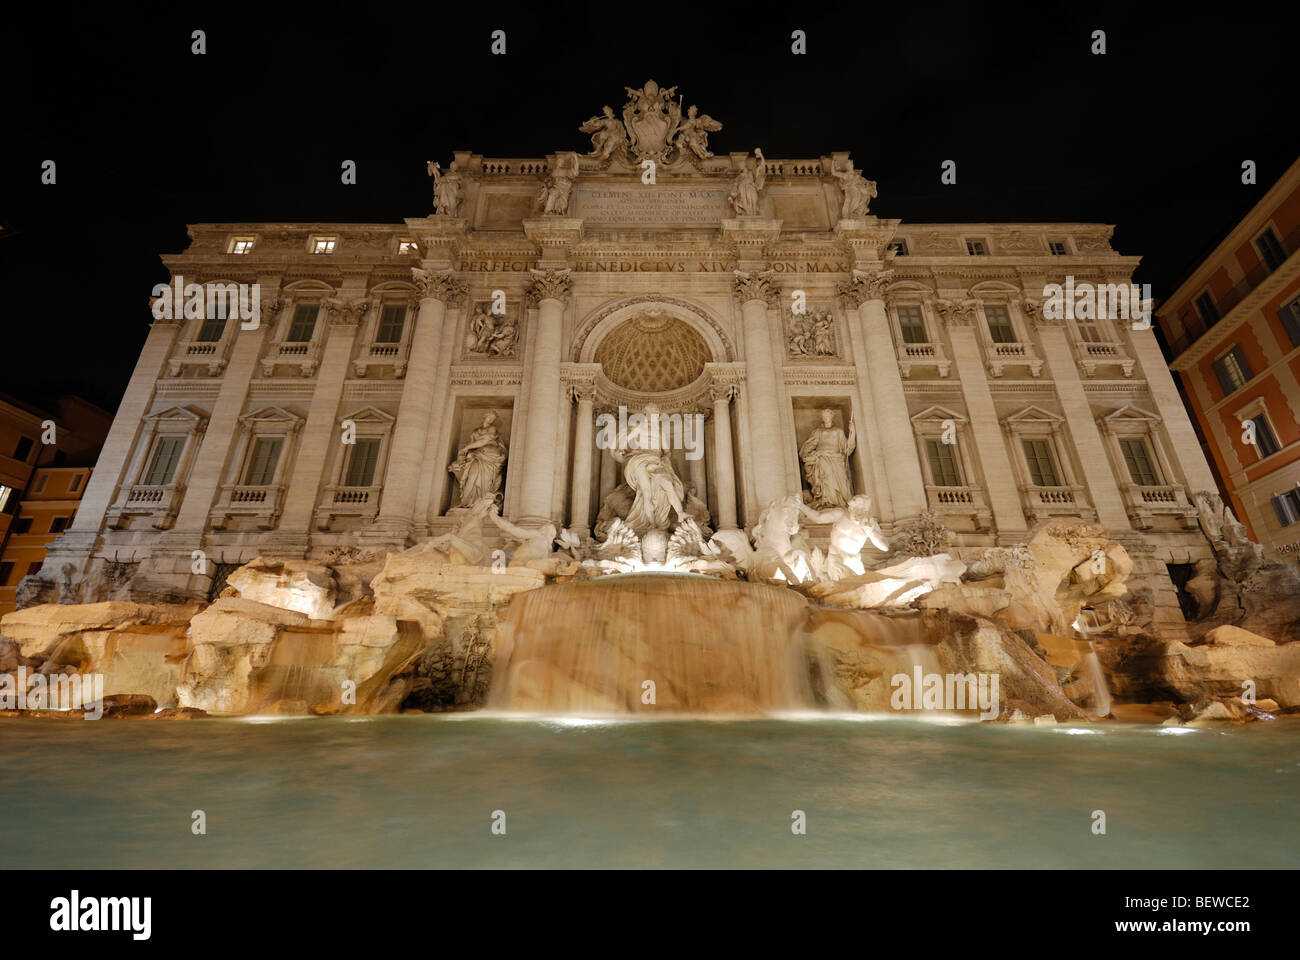 La Fontana de Trevi (Fontana di Trevi) por la noche, en Roma, Italia, bajo ángulo de visión Foto de stock